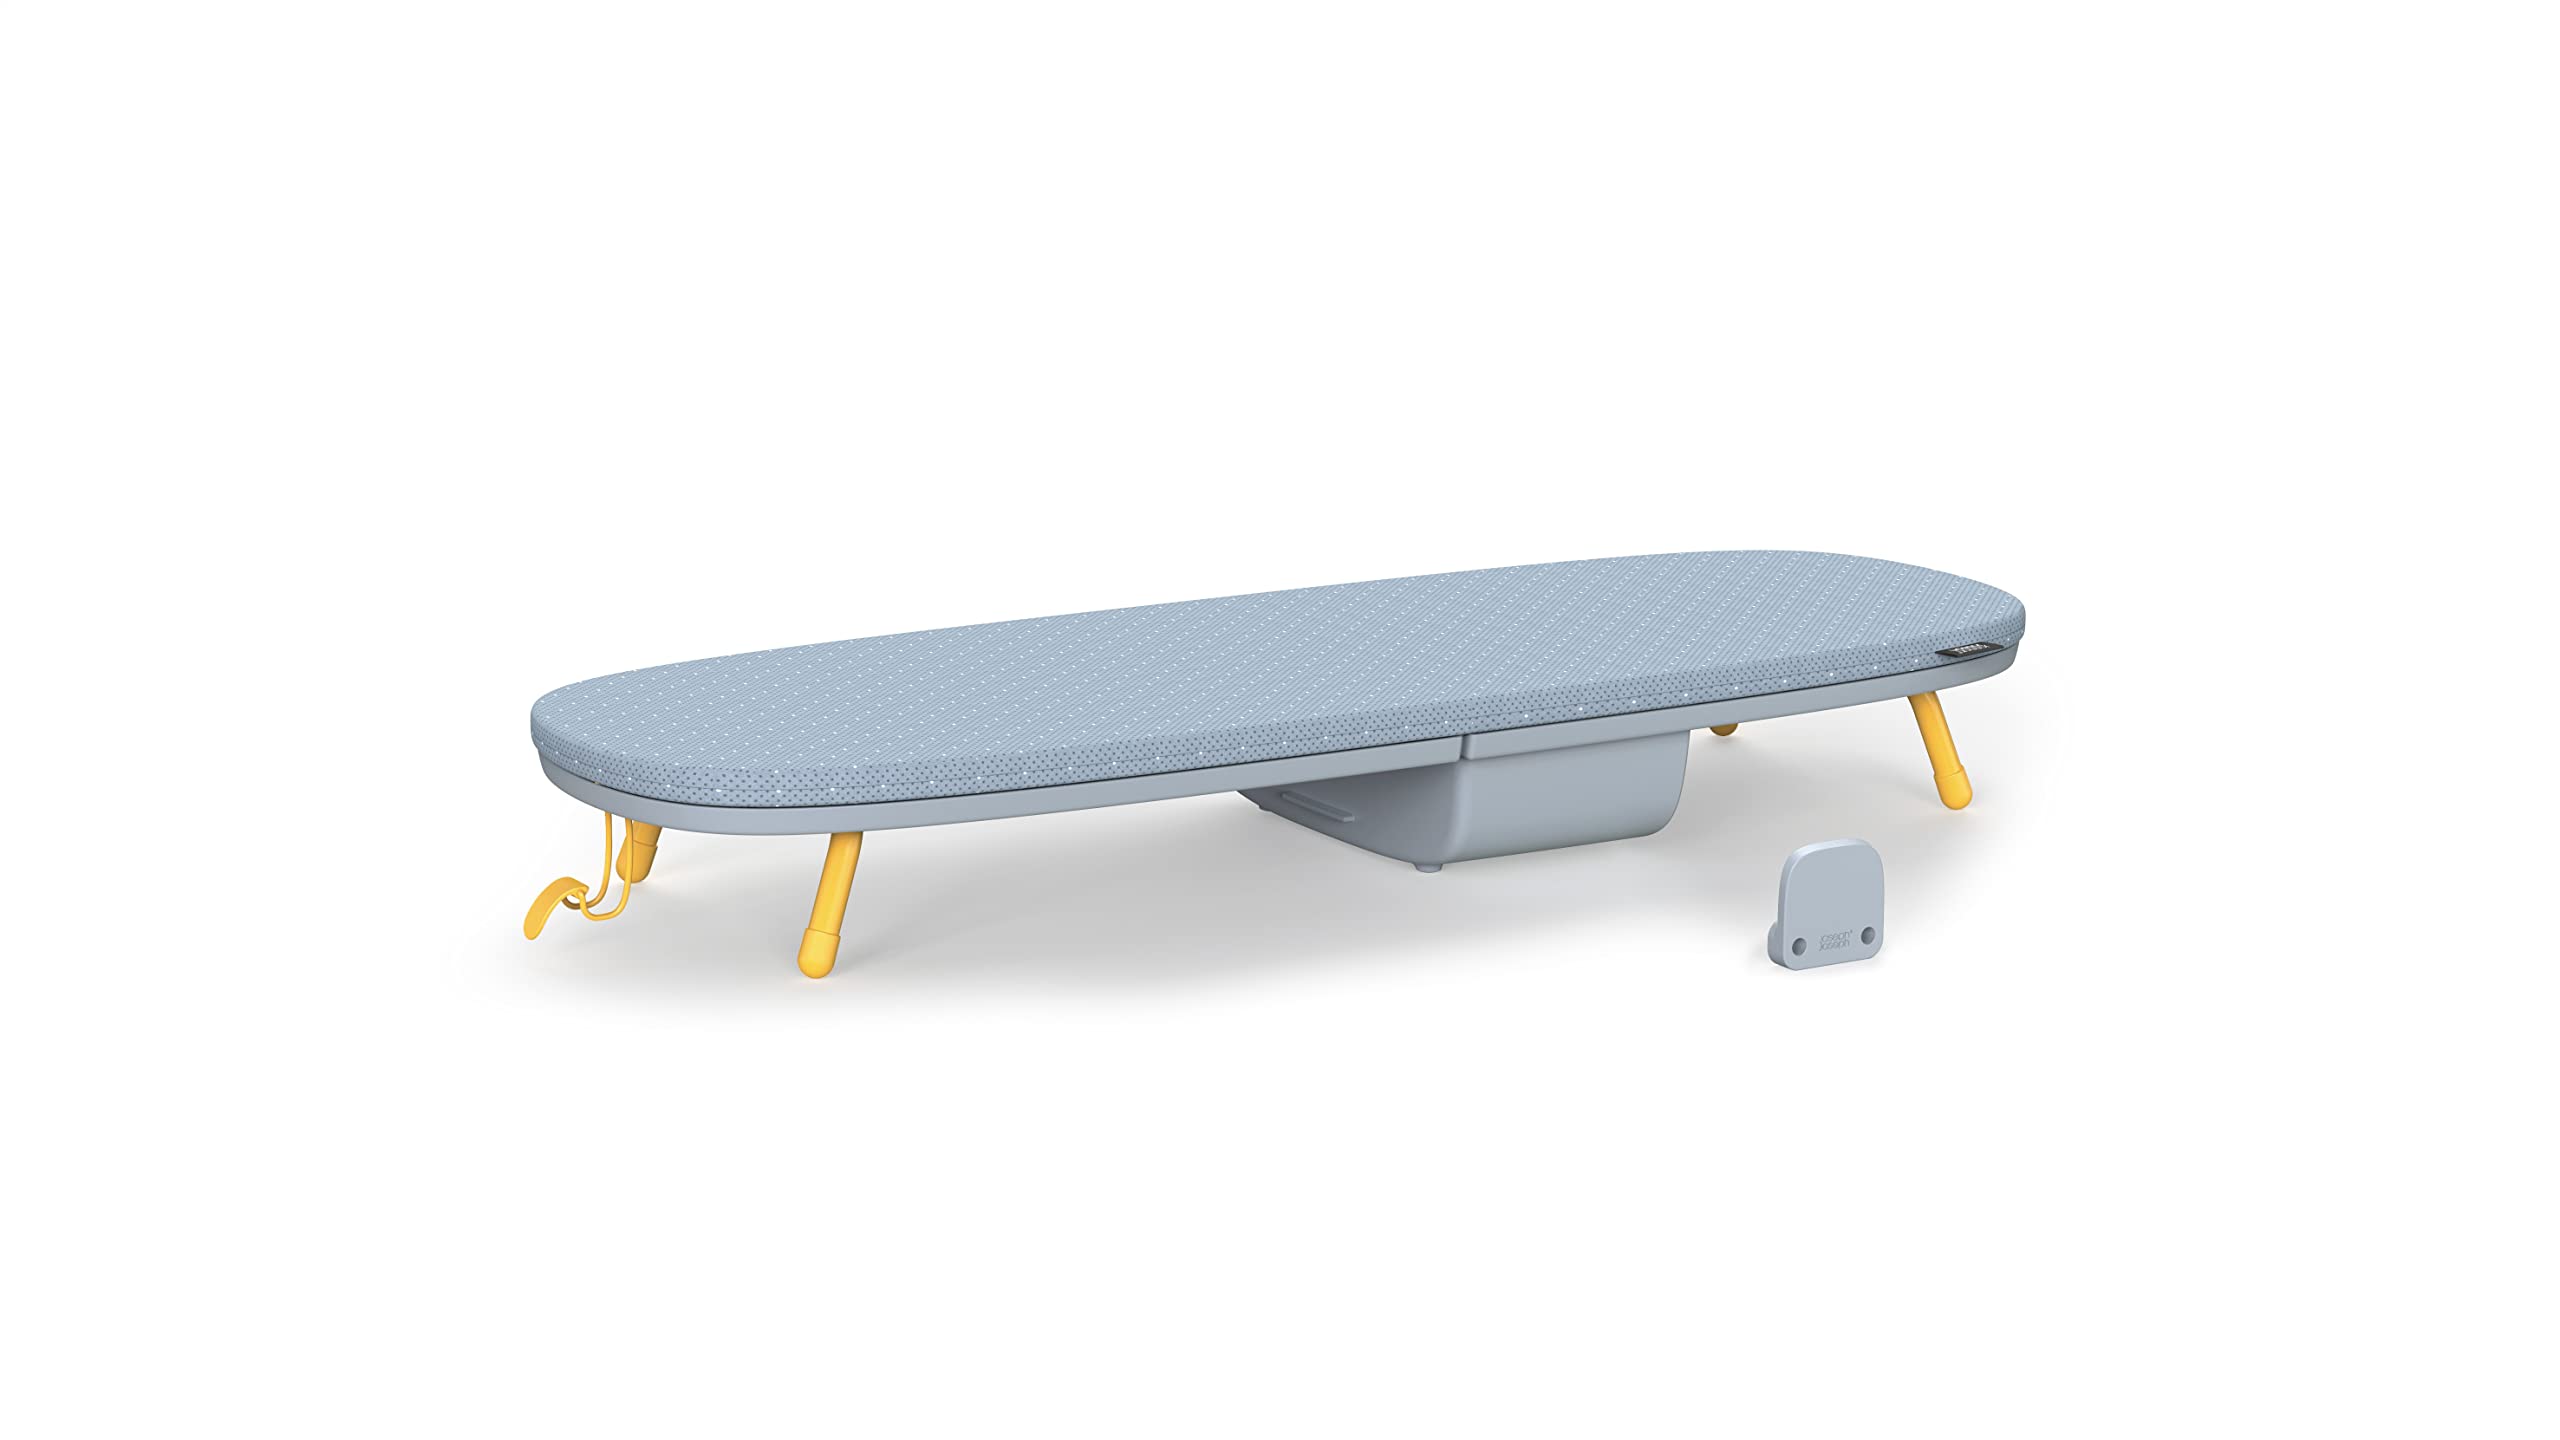 Joseph Joseph Folding Space-Saving, Compact Table-top Ironing Board, Grey/Yellow